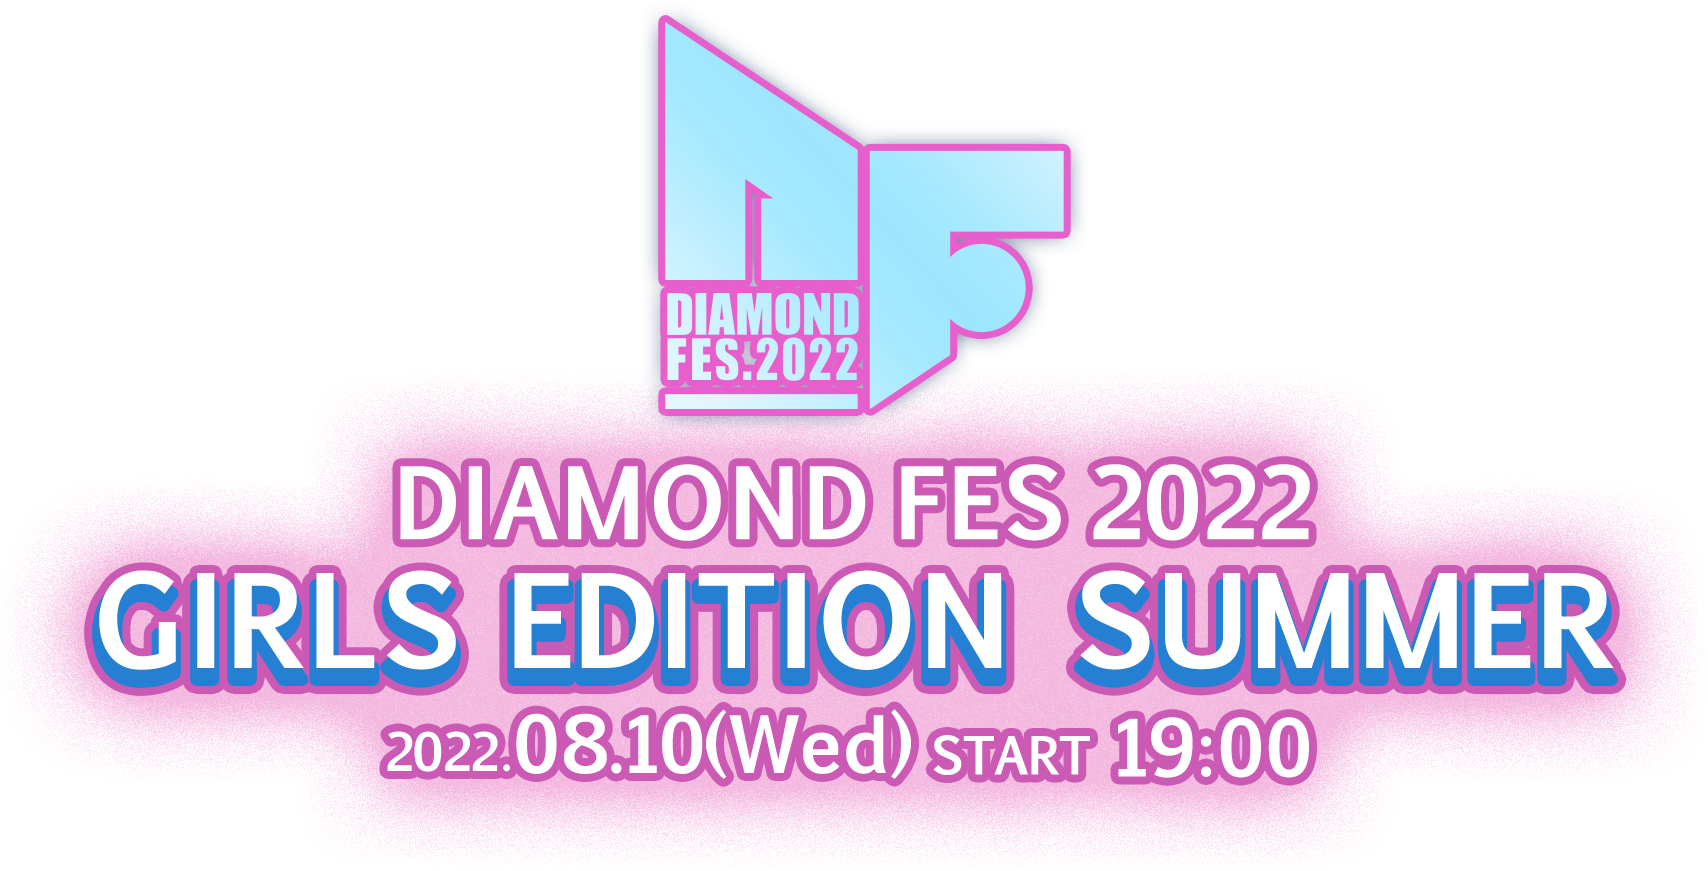 DIAMOND FES 2022 GIRLS EDITION SMMER